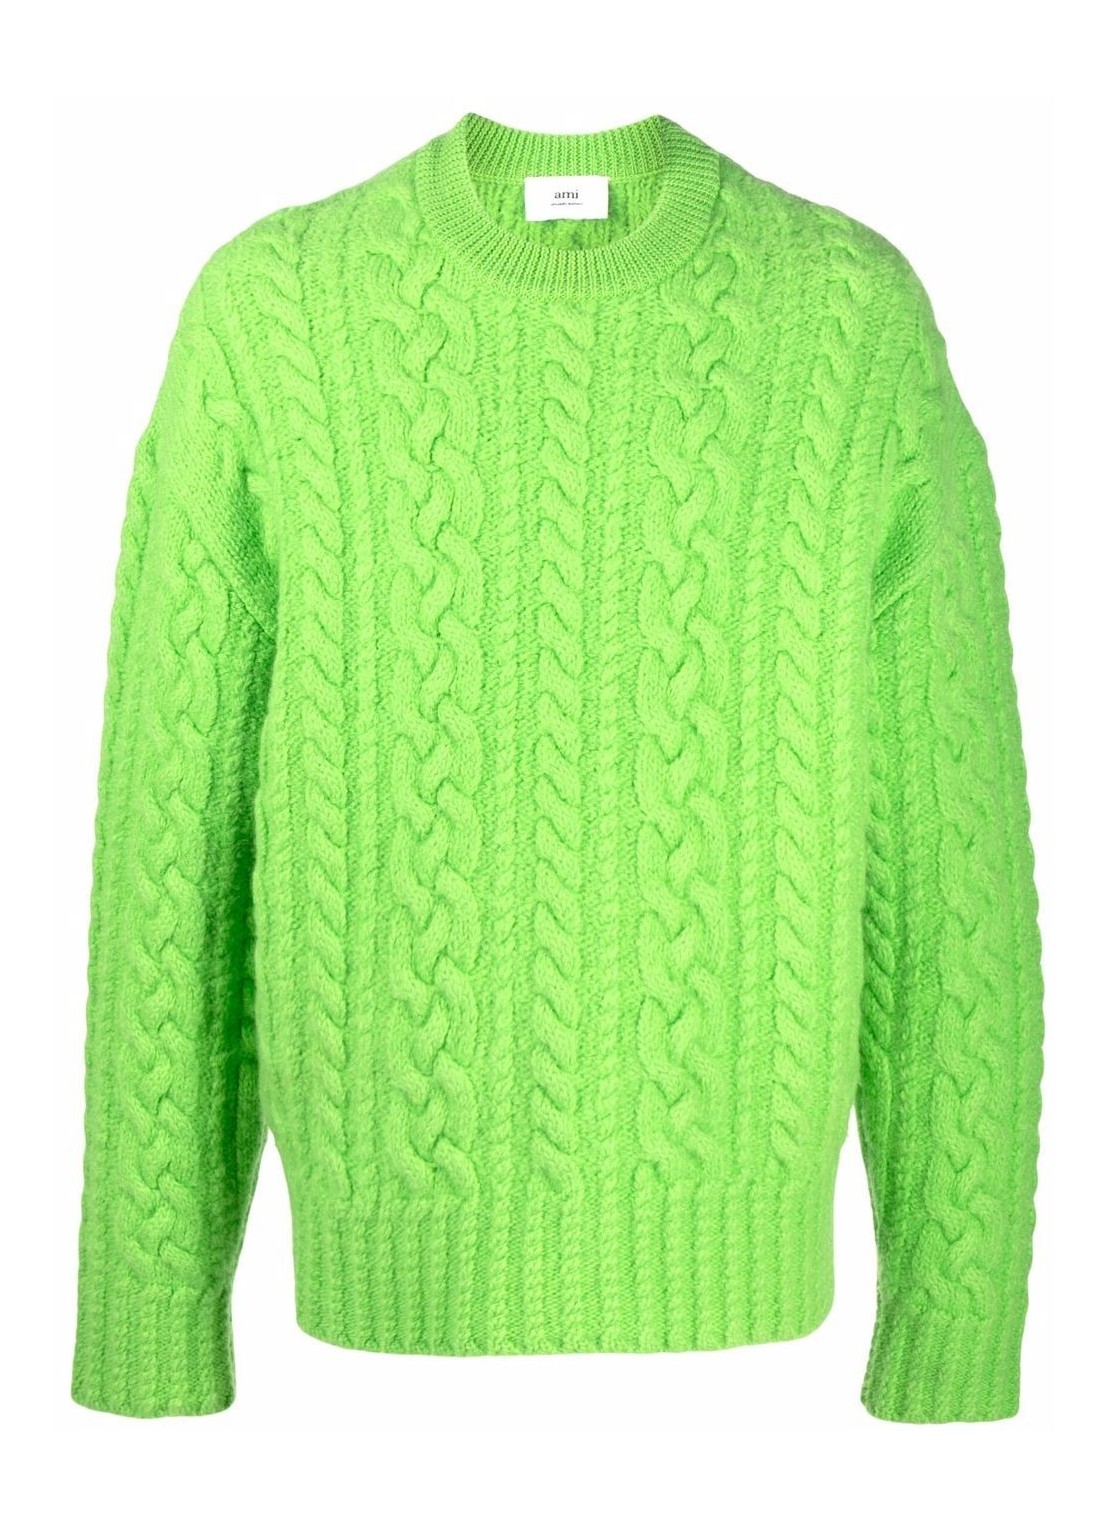 Punto ami knitwear man cable knit sweater hks011017 300 talla verde
 